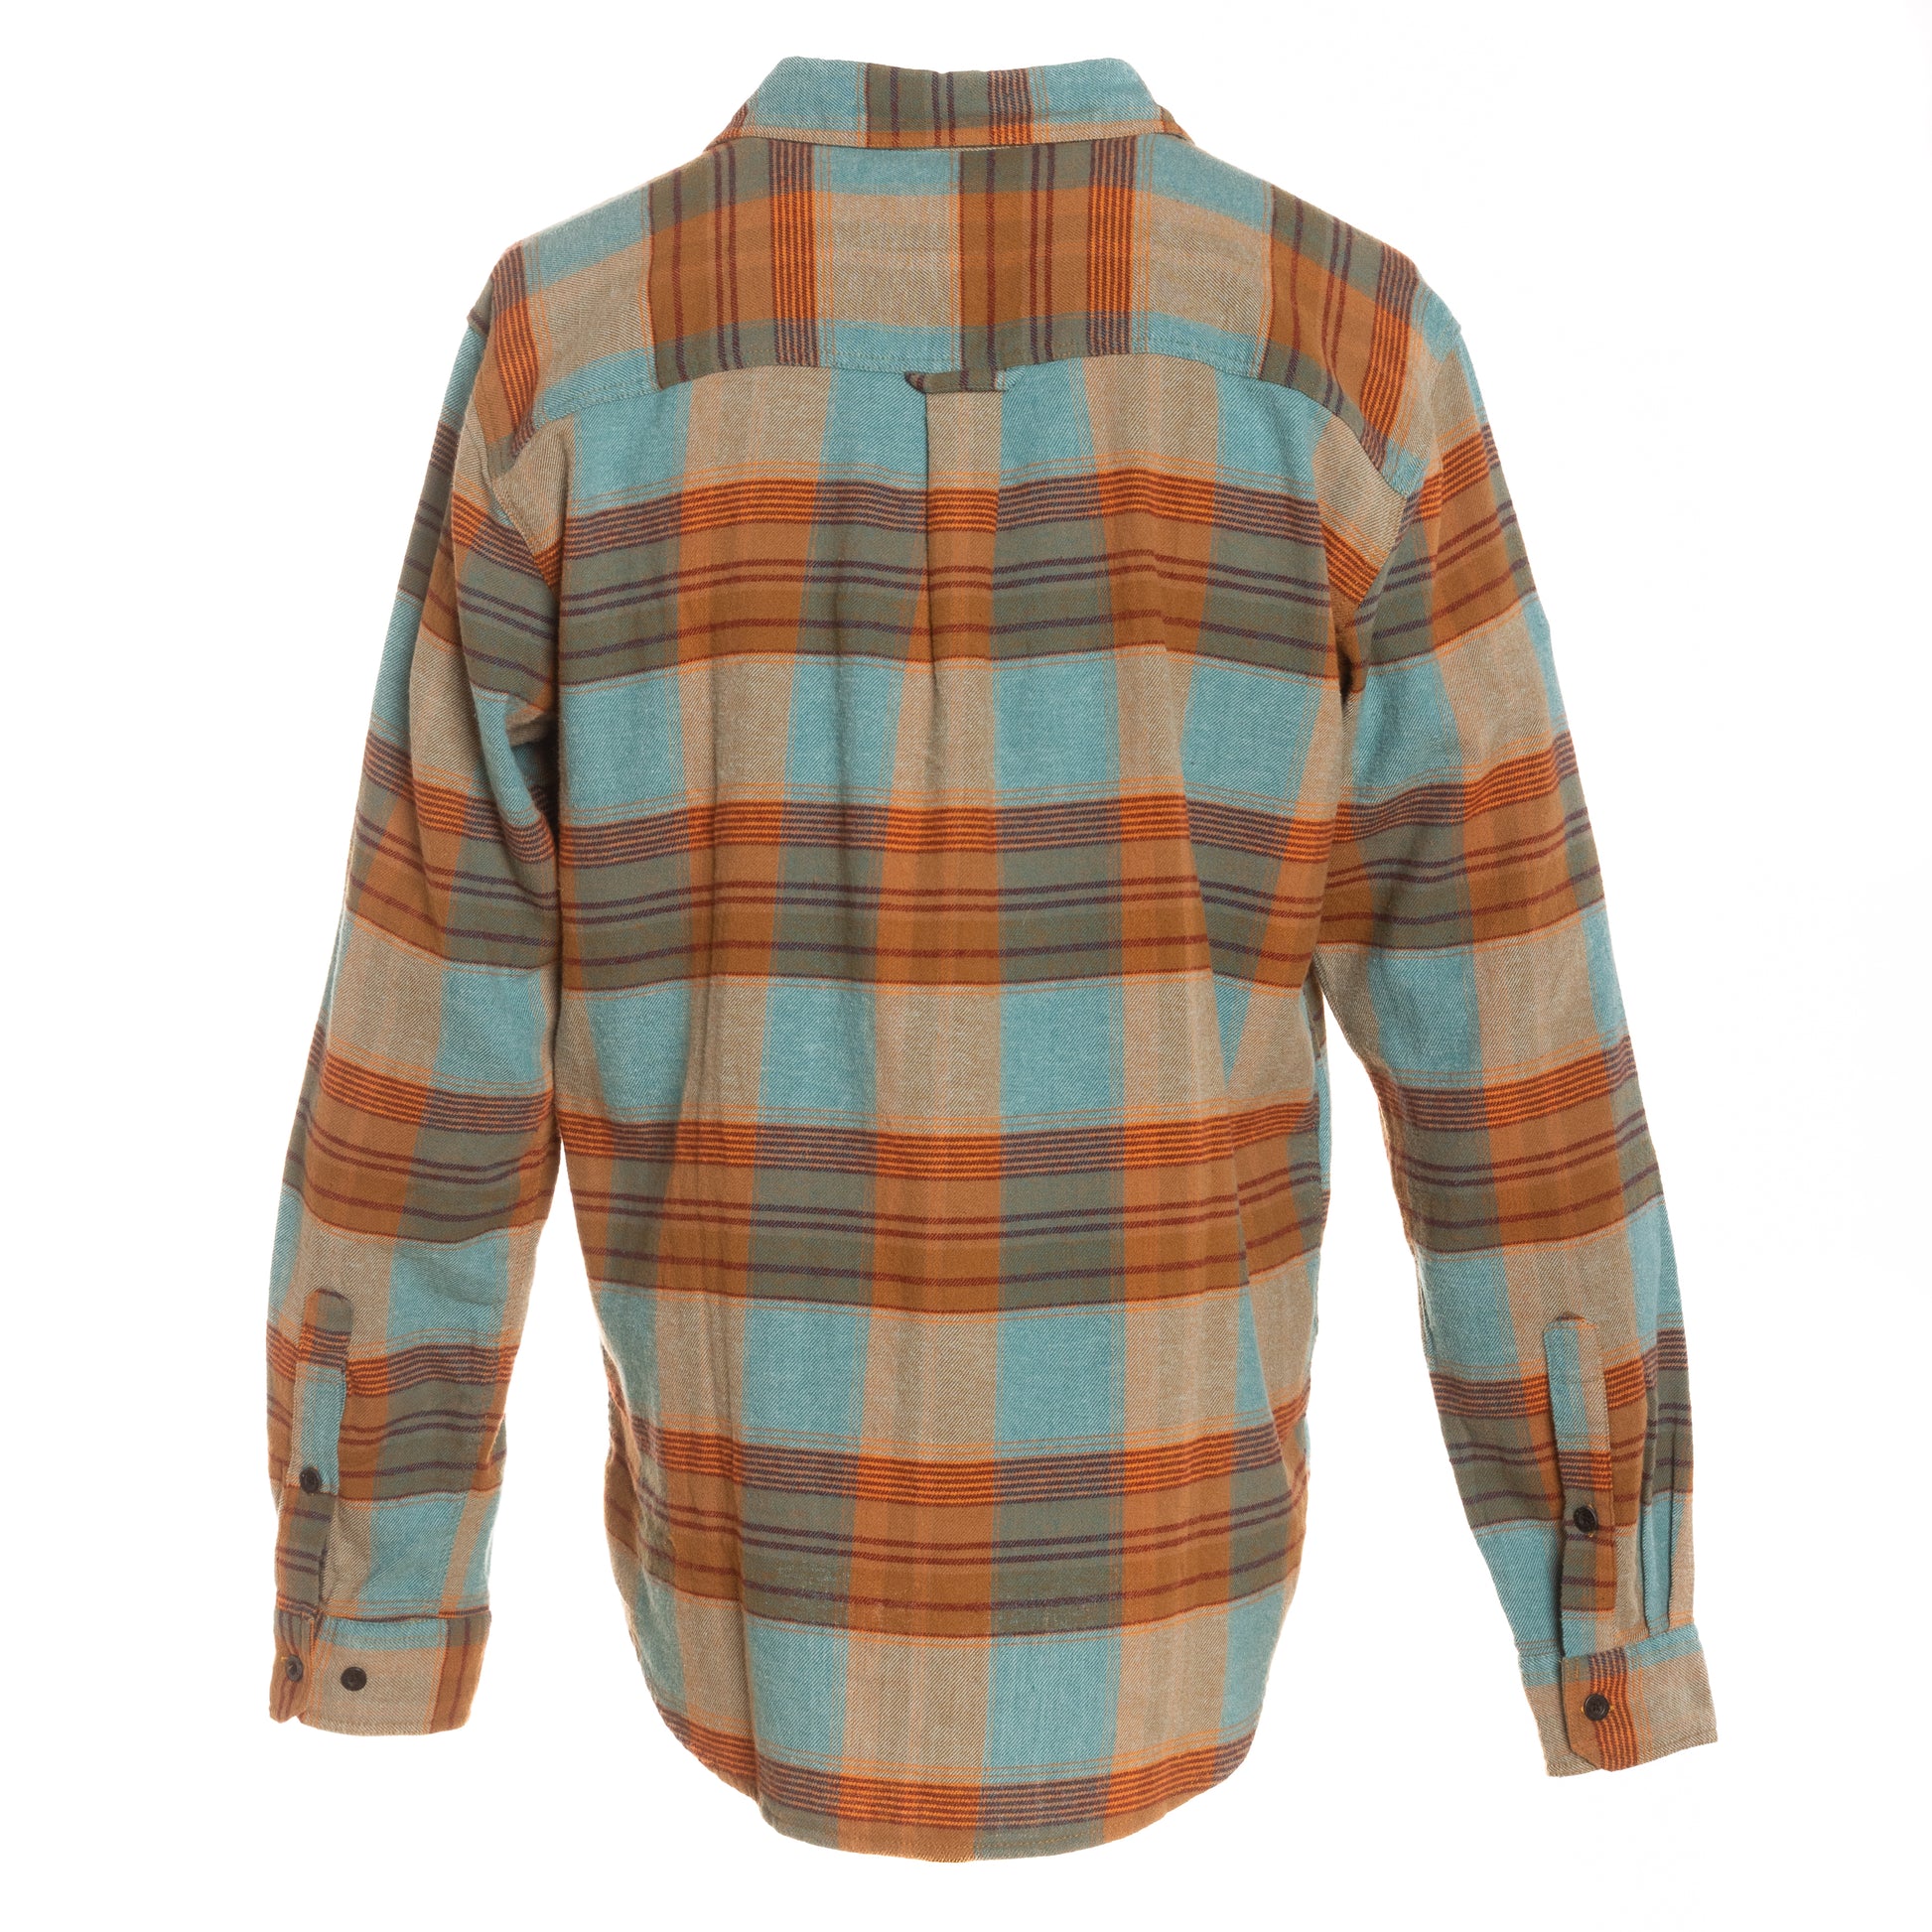 Men's Flannel Shirt - Modern Fit - 5 OZ Woolly Dry Goods